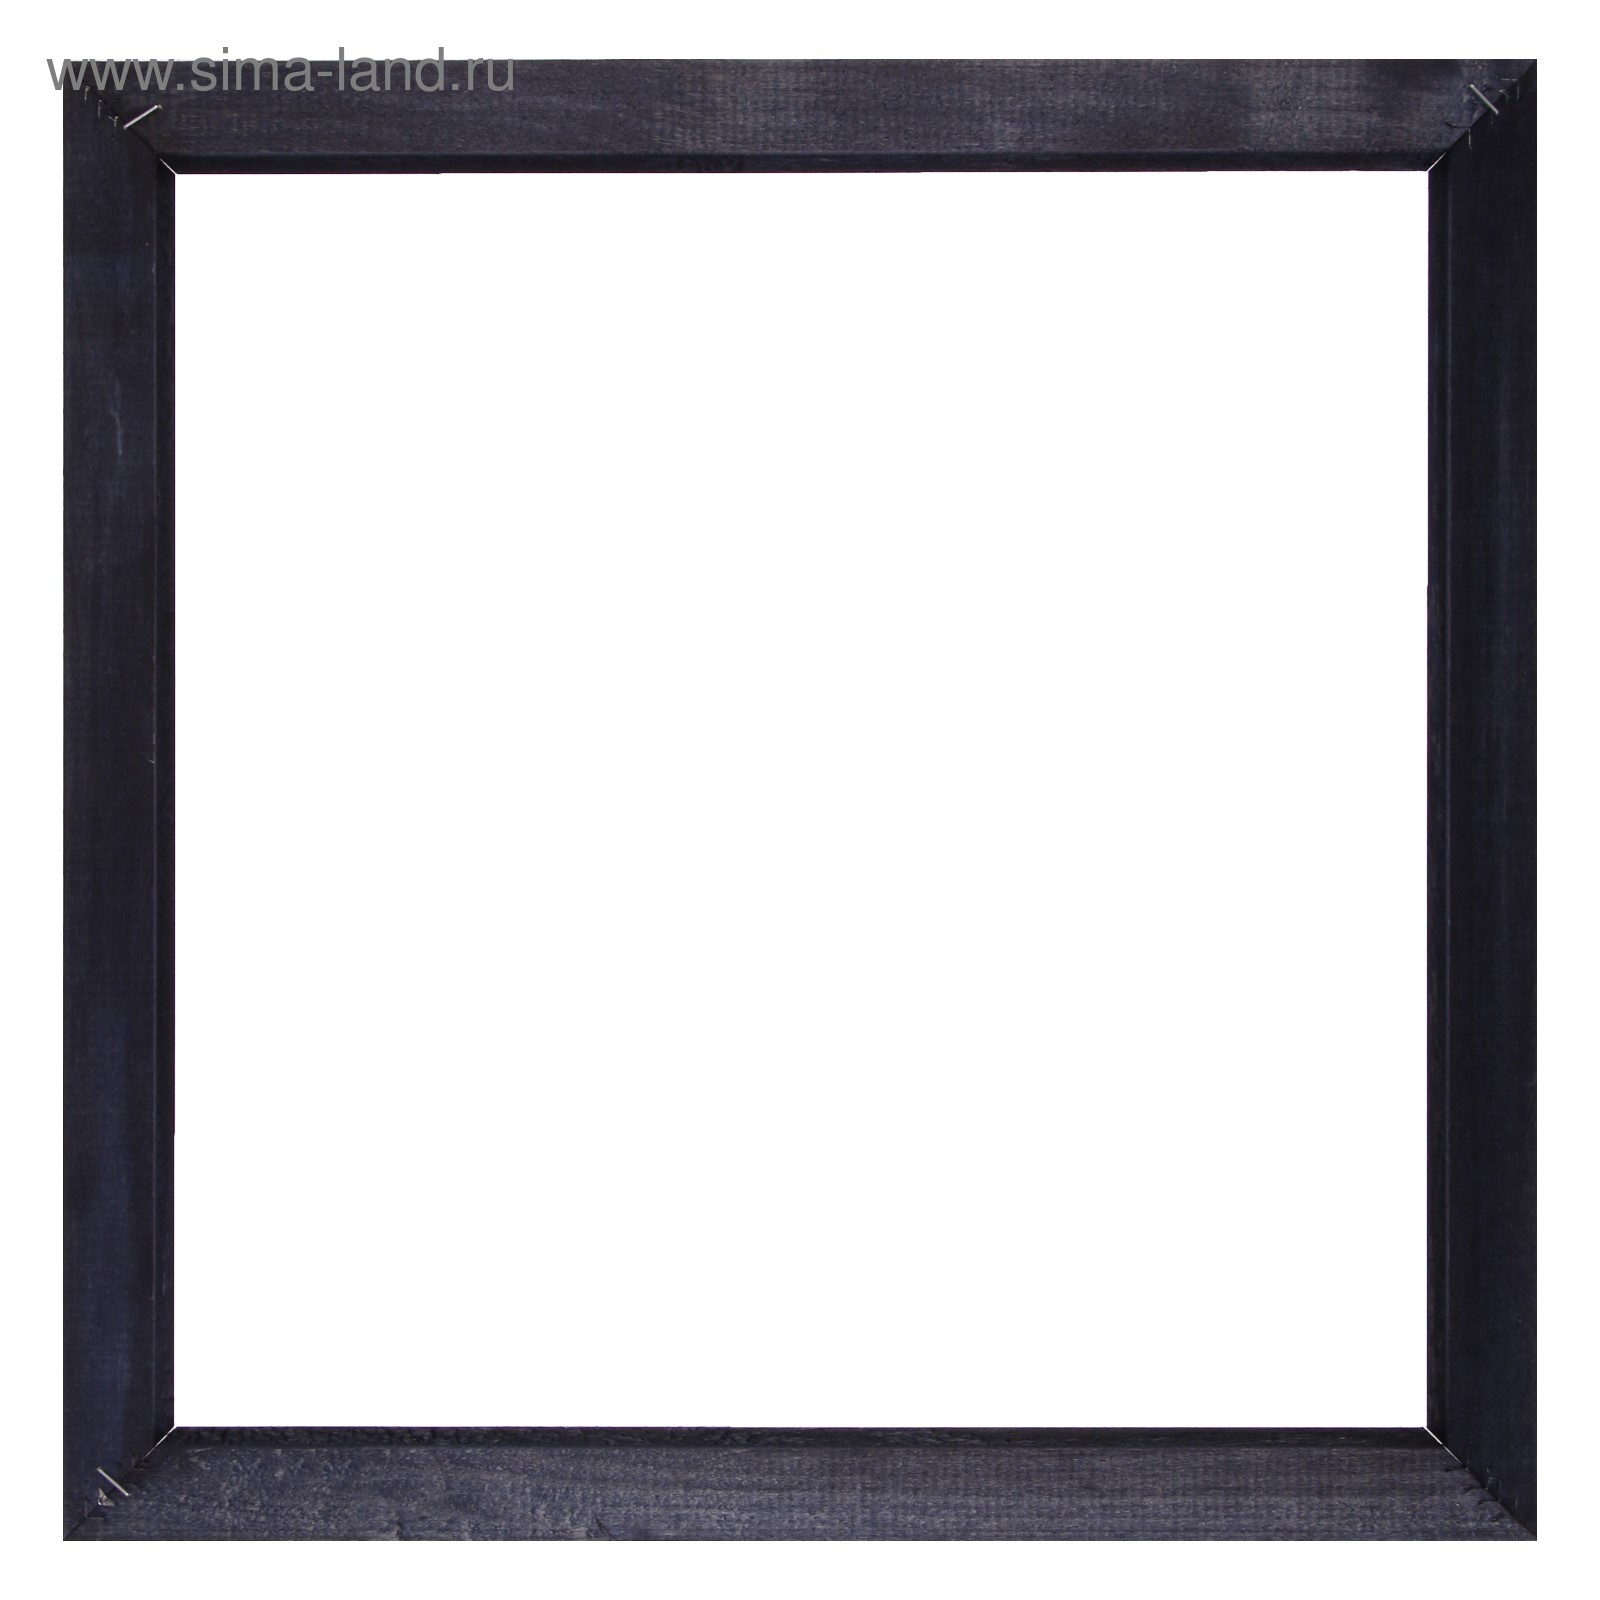 Gira 1x frame Black(черная квадратная рамка для